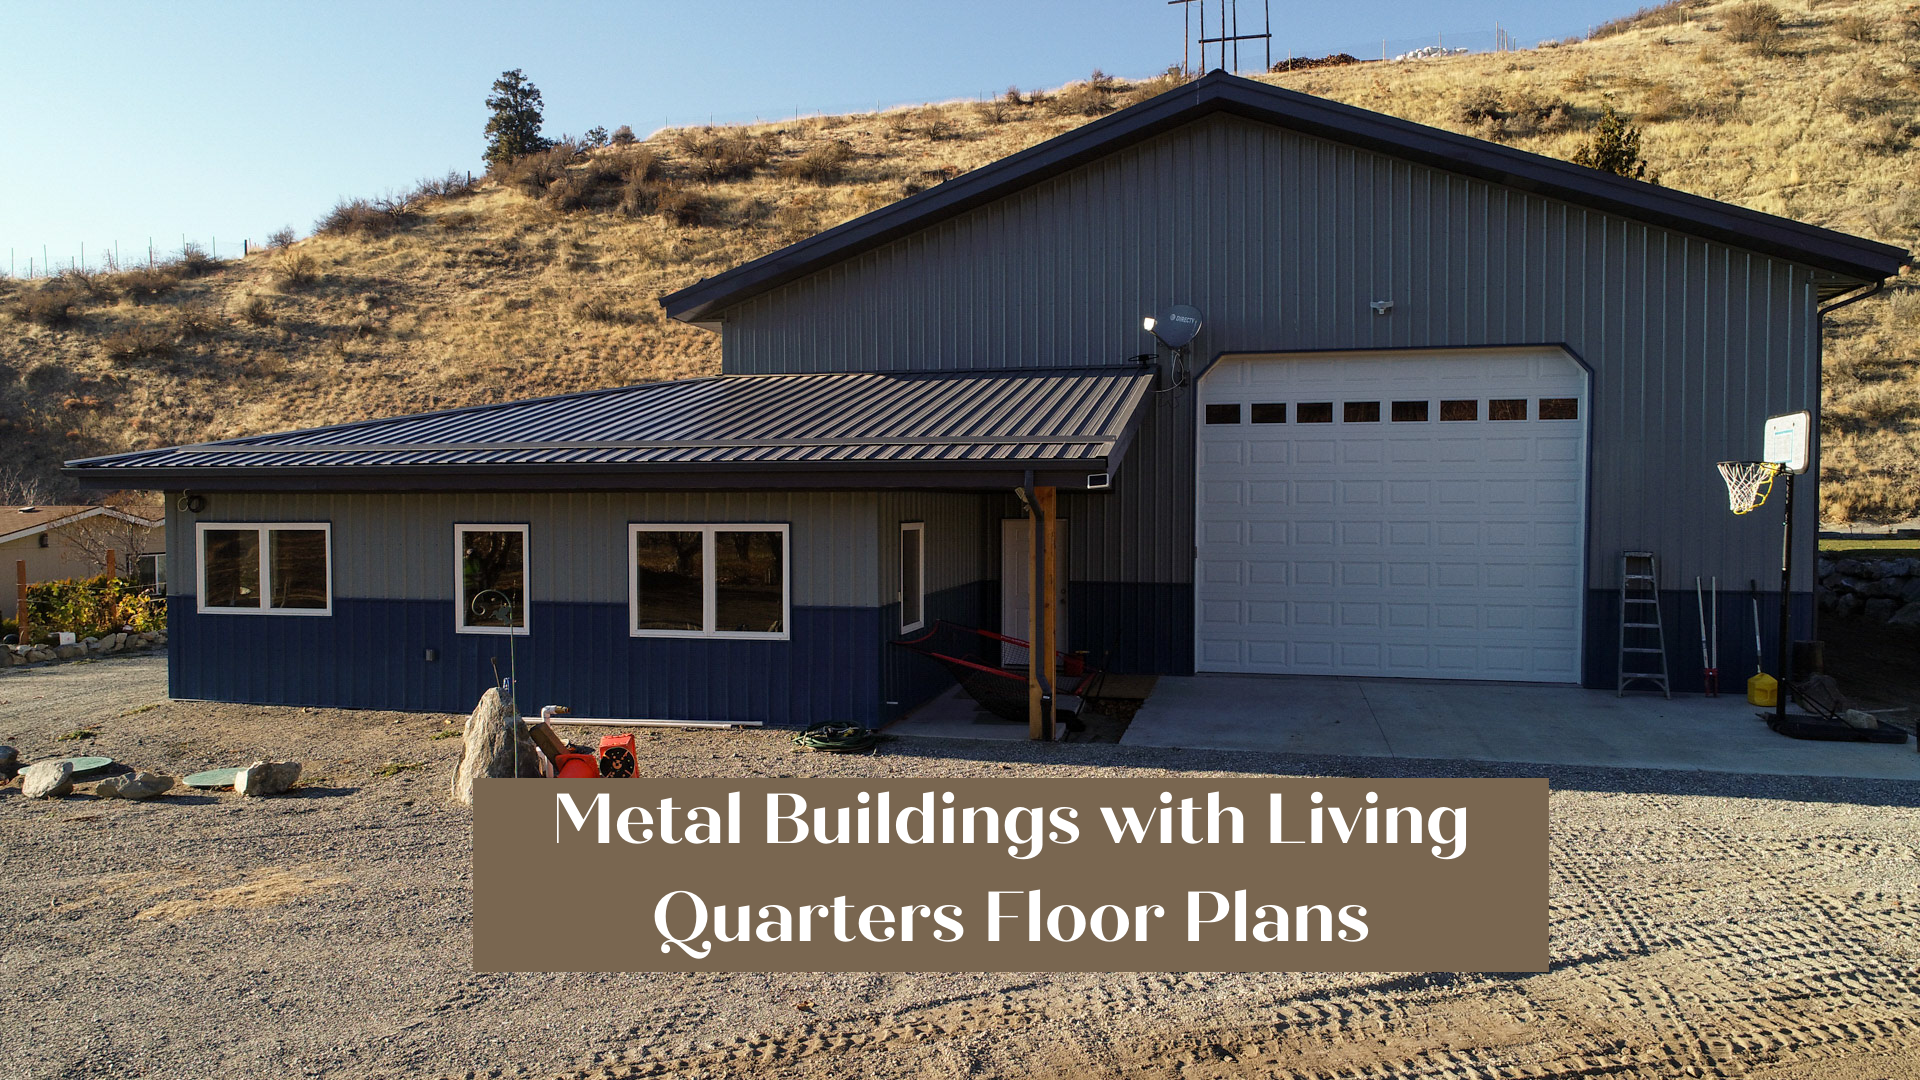 Metal Buildings with Living Quarters Floor Plans